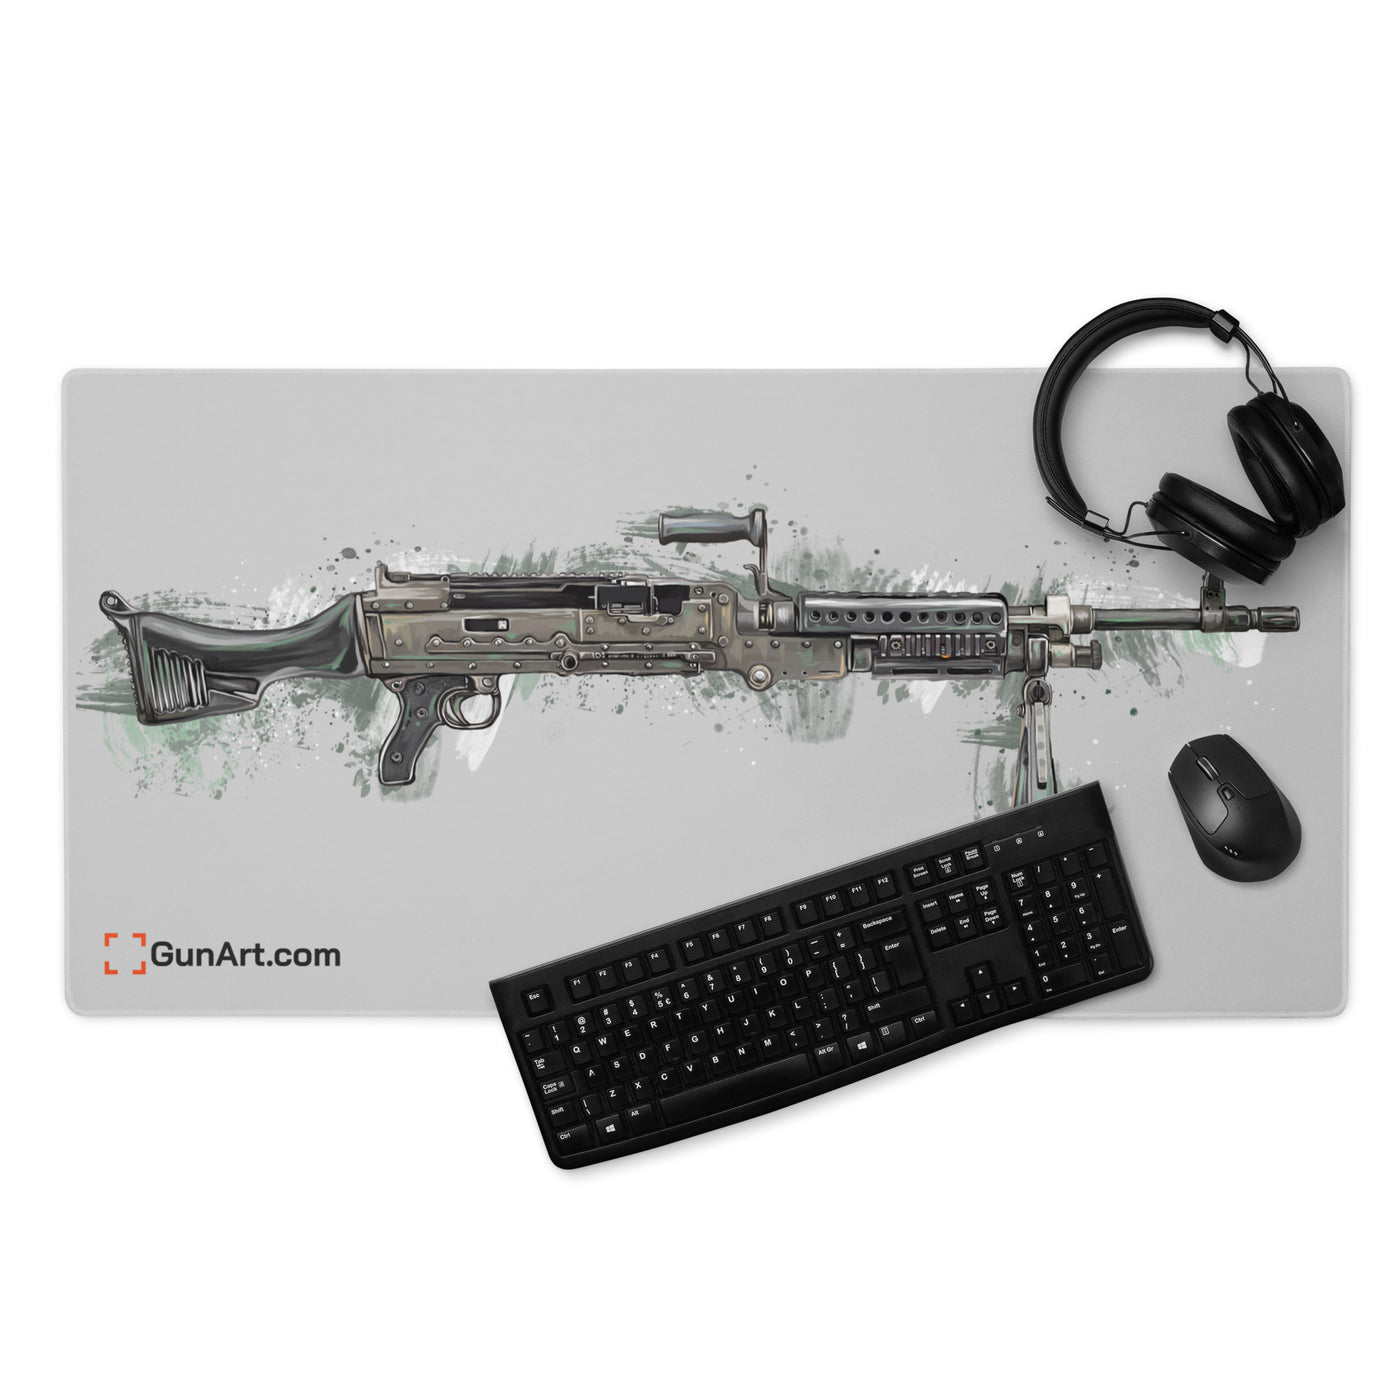 M240B - Belt Fed 7.62x51 Machine Gun Gaming mouse Pad - Grey Background